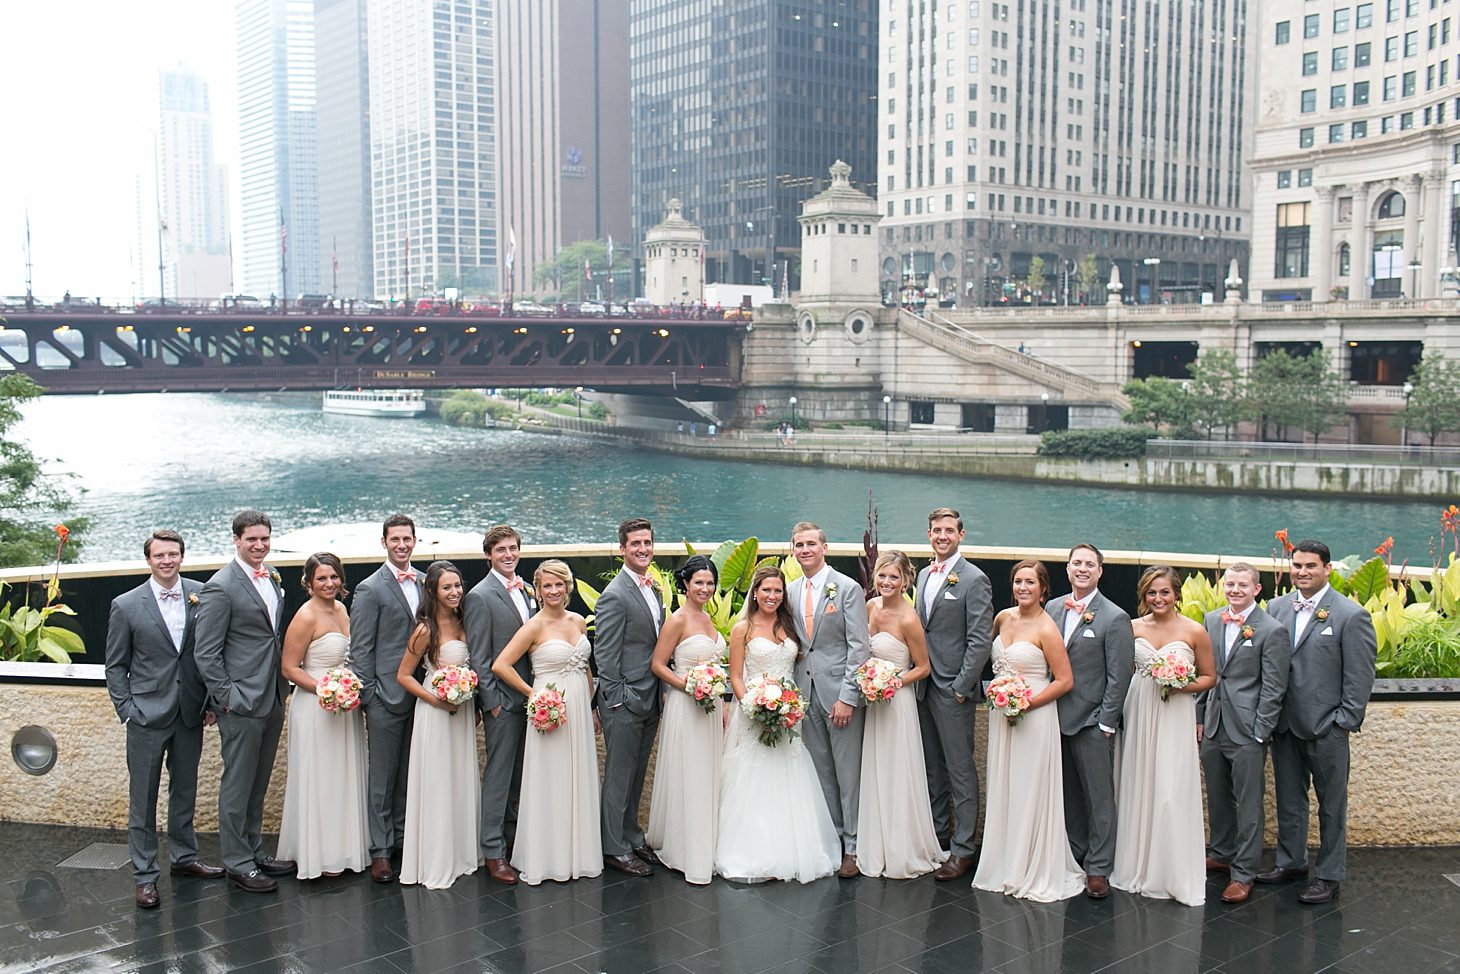 Galleria Marchetti Chicago Wedding by Christy Tyler Photography_0042